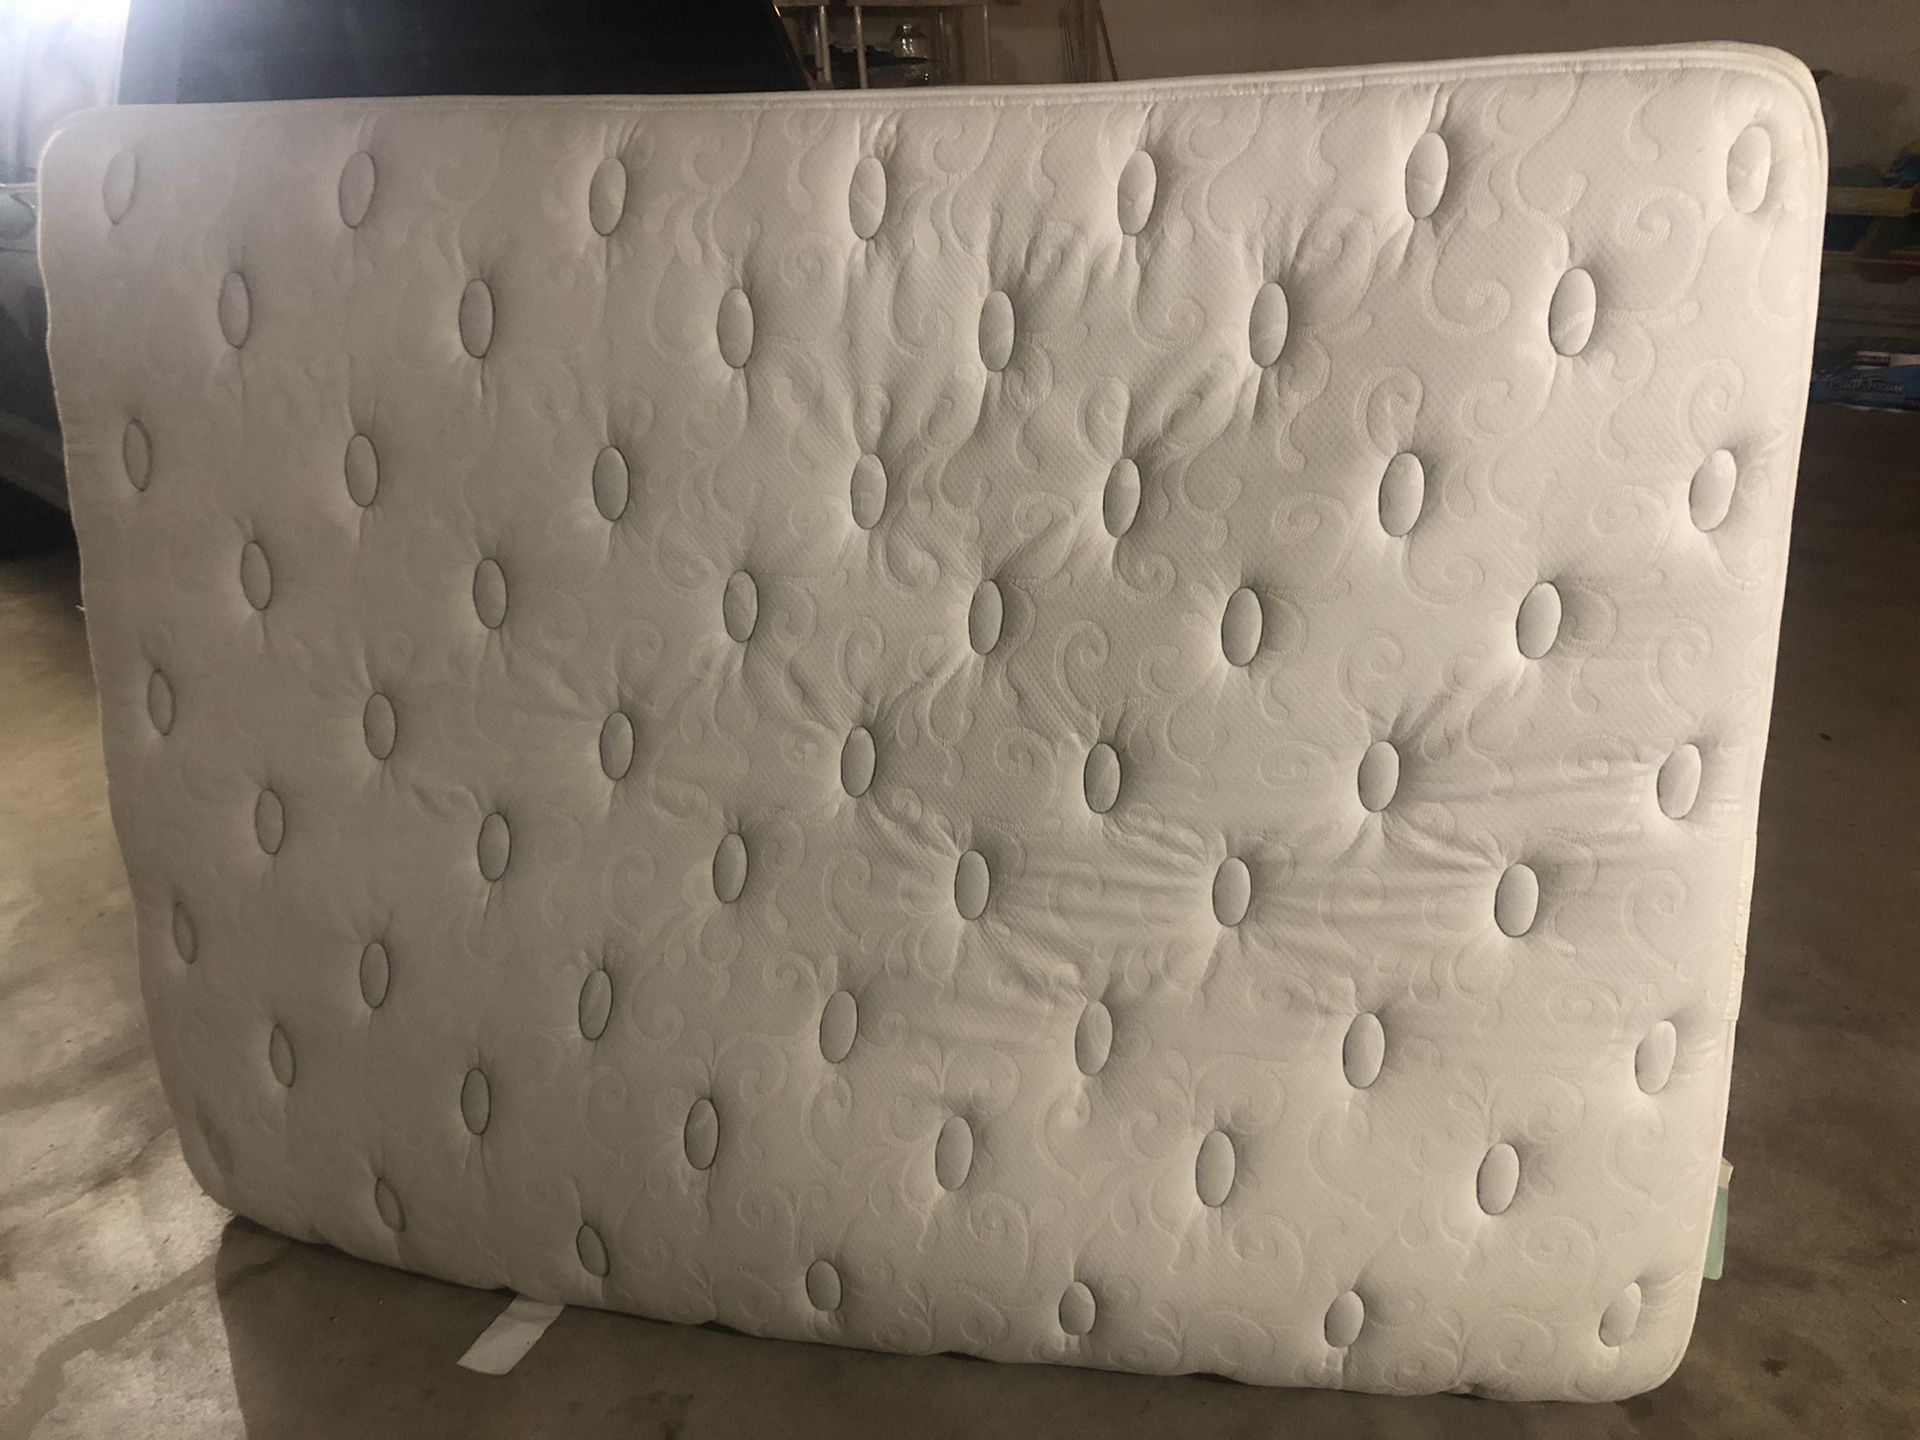 Queen size mattress for free